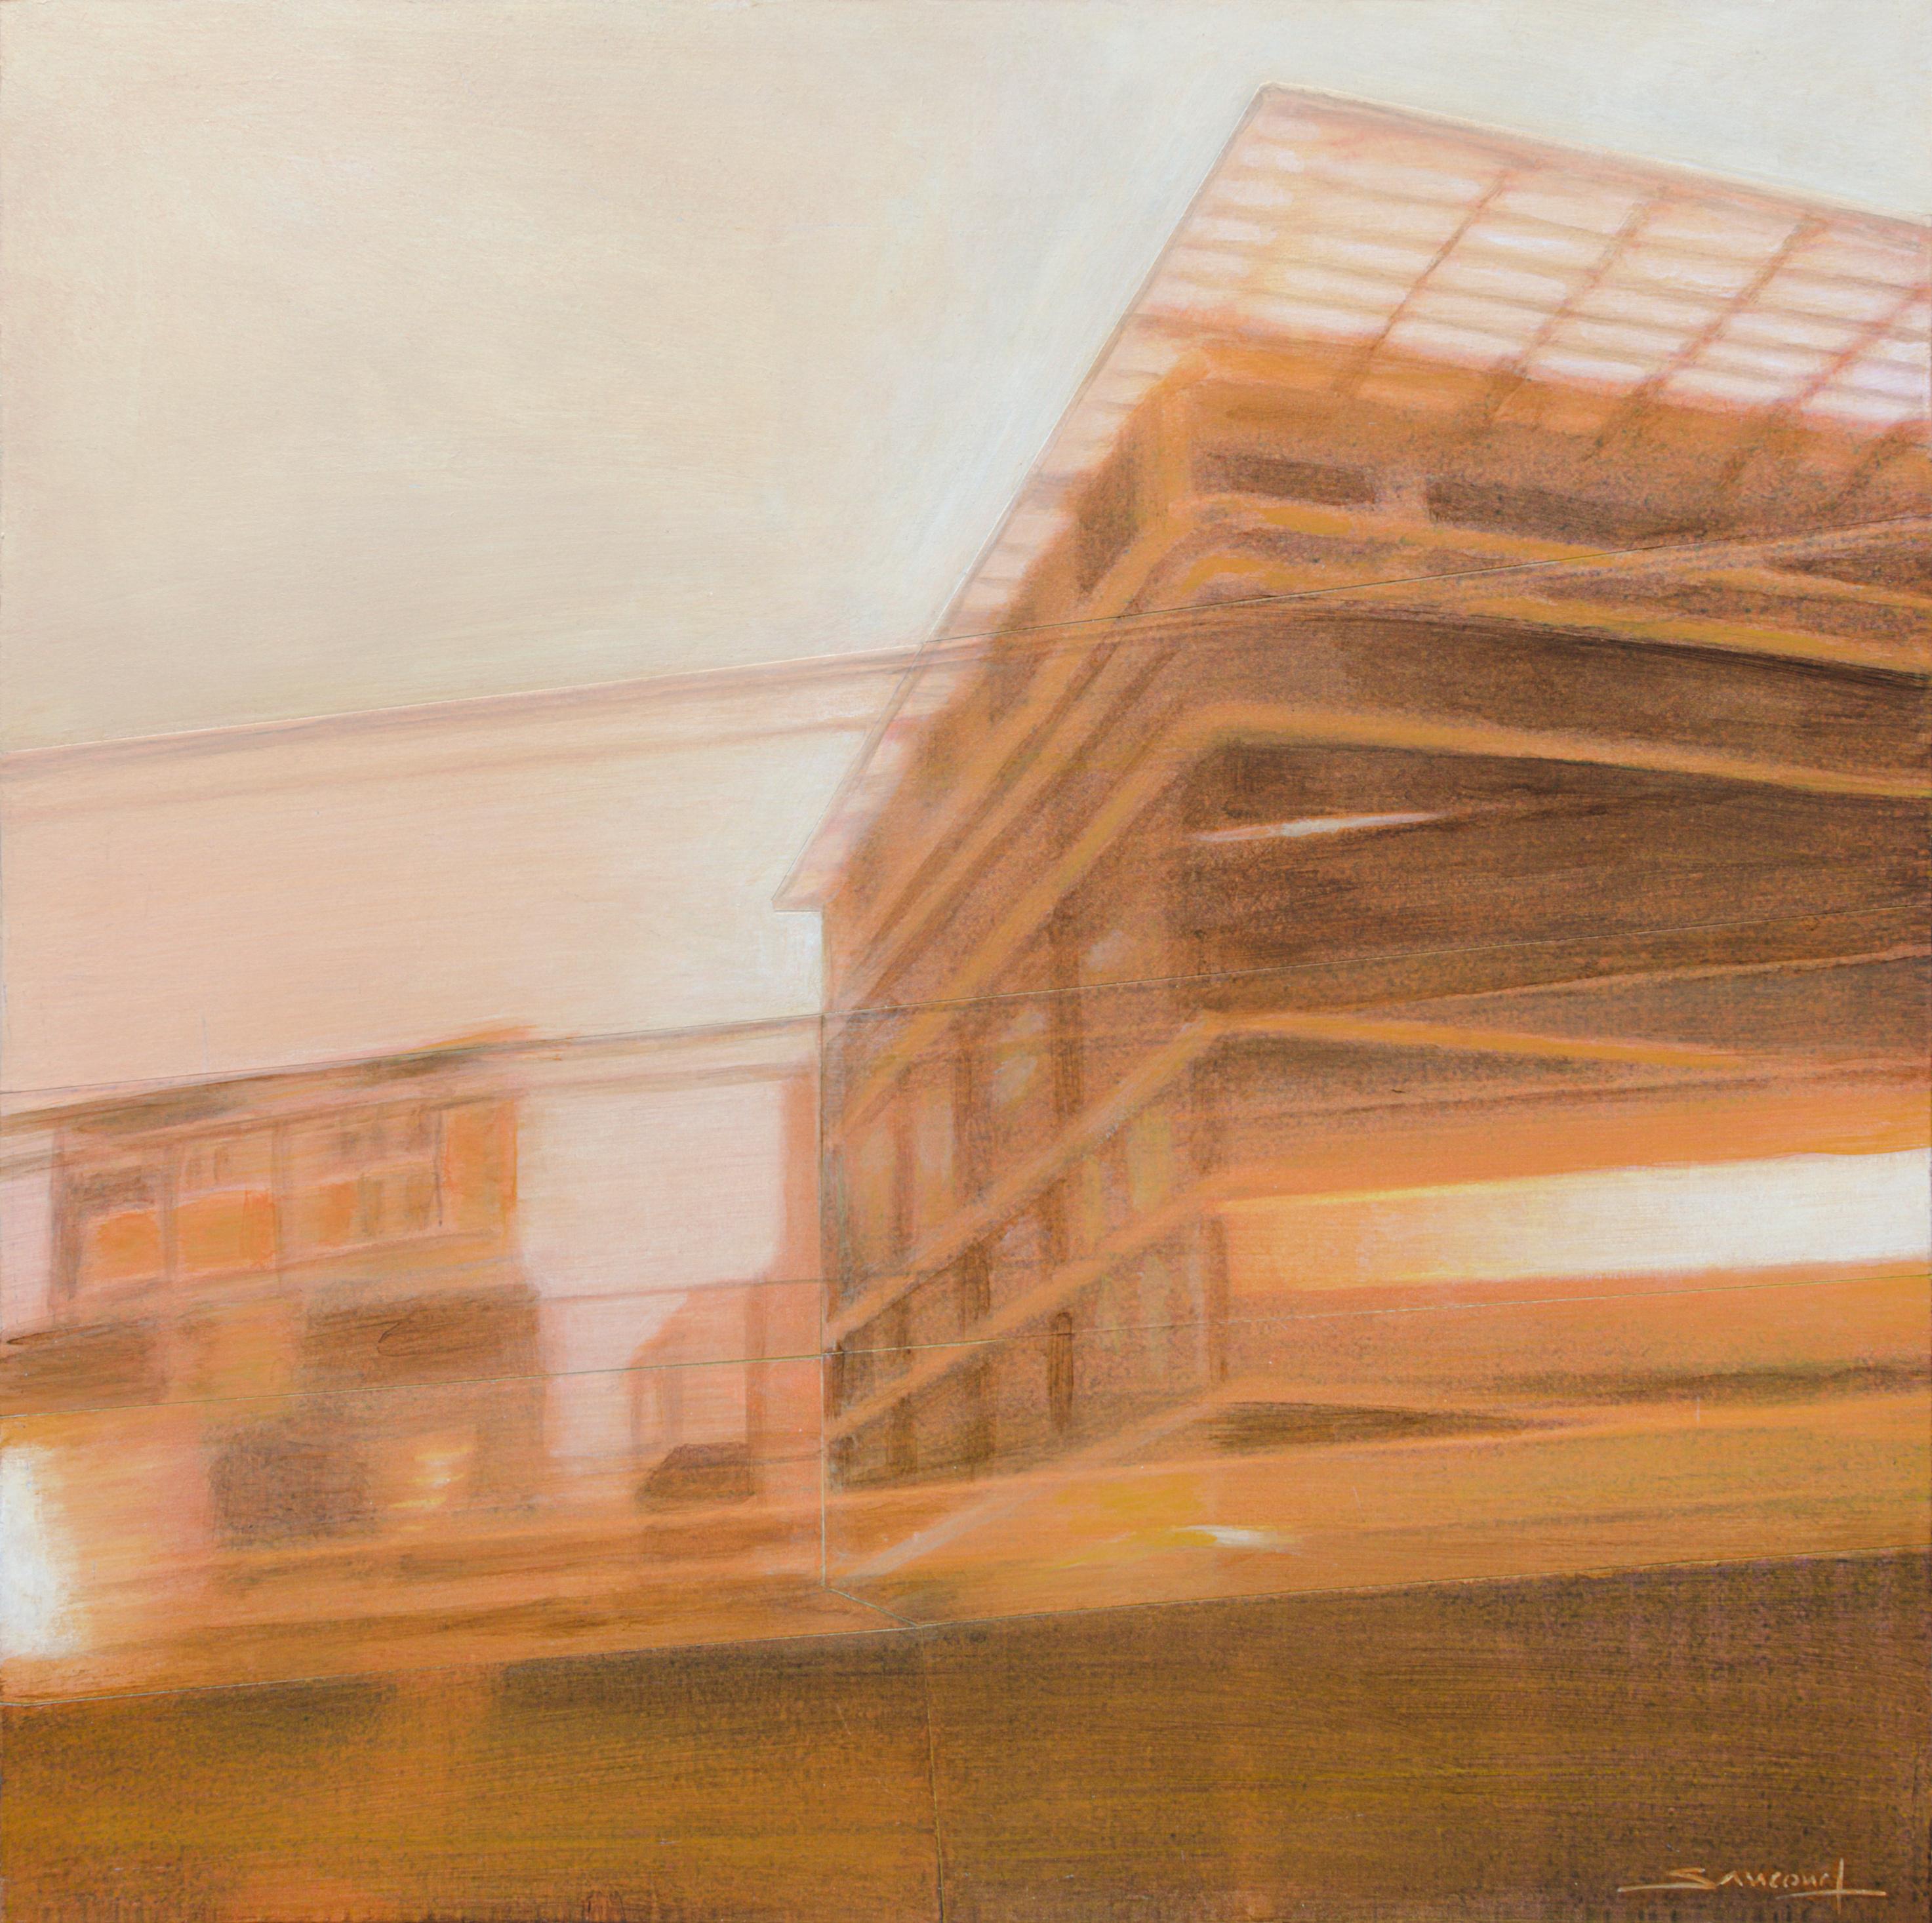 "Night Train #13 (Early Morning)", Sepia Urban Landscape Mixed Media Painting